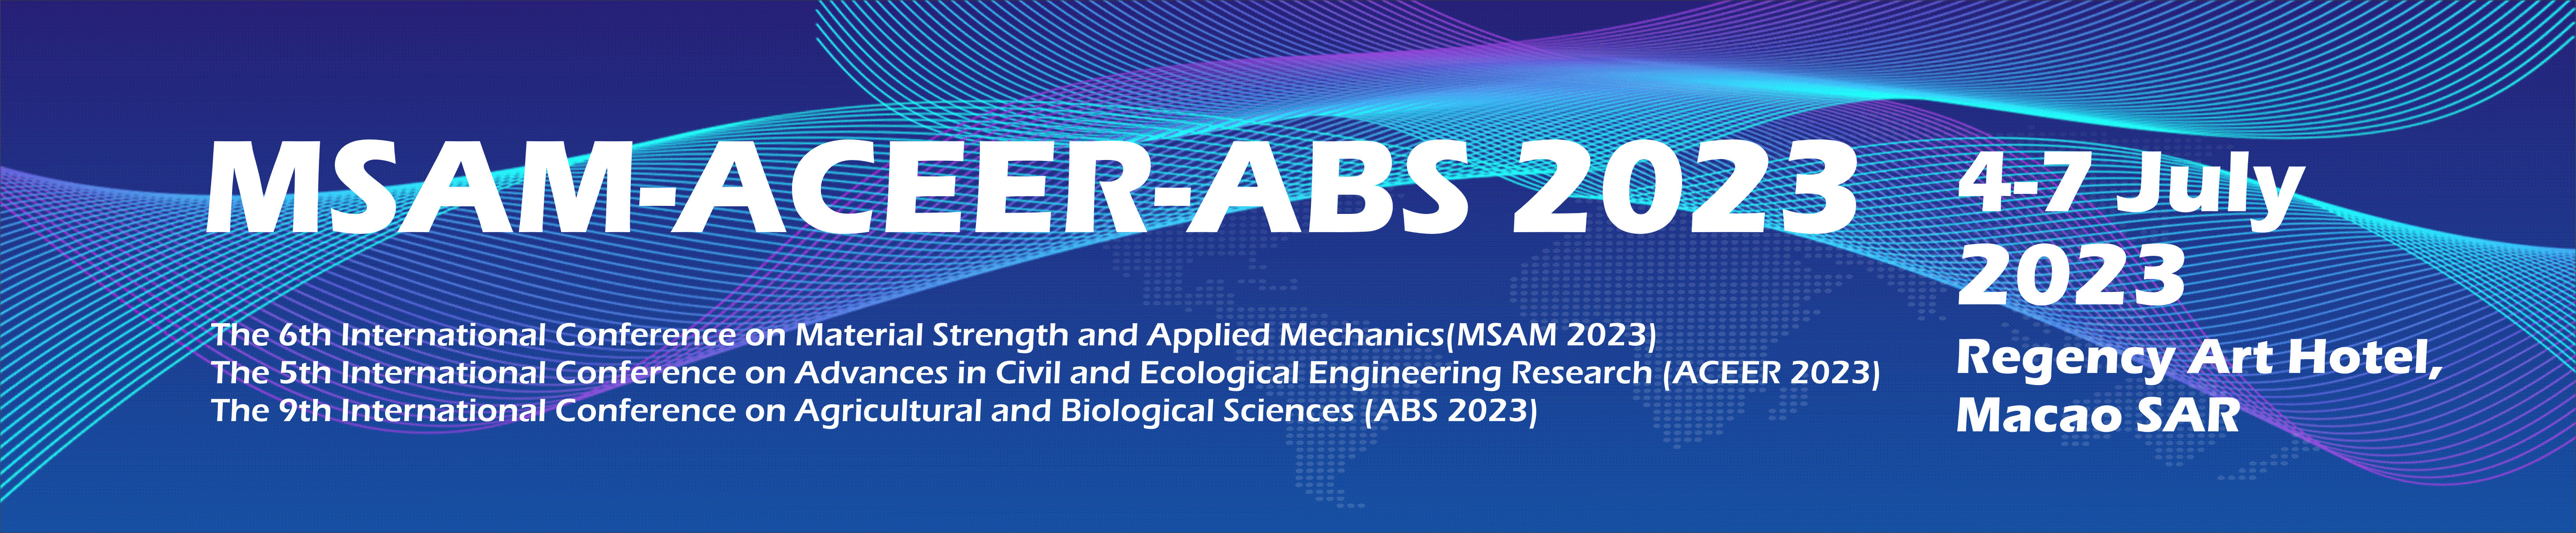 MSAM-ACEER-ABS 2023